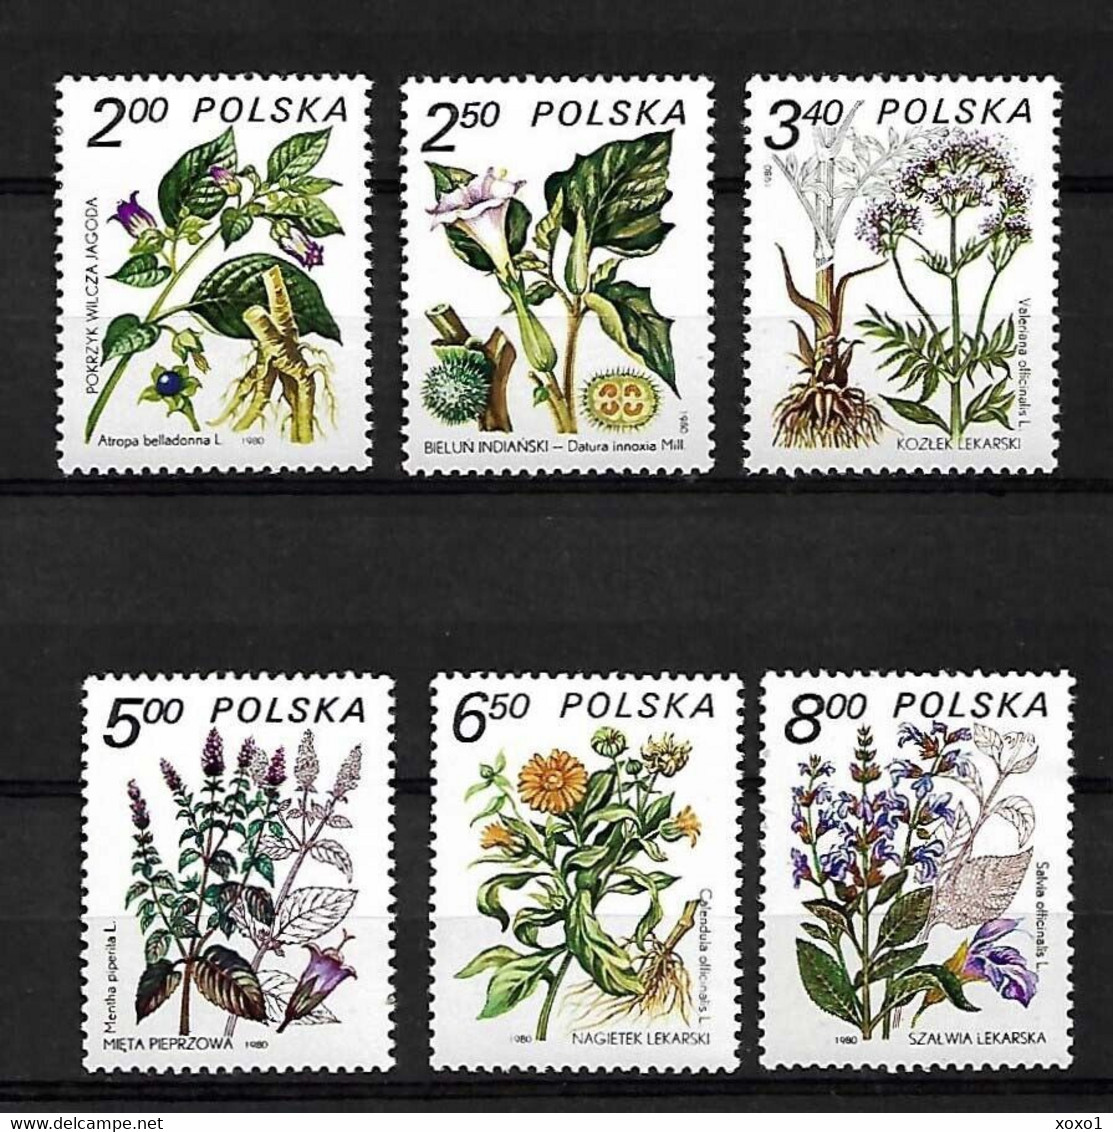 Poland 1980 MiNr. 2706 - 2711 Polen Medicinal Plants 6v MNH**  3.00 € - Plantas Medicinales